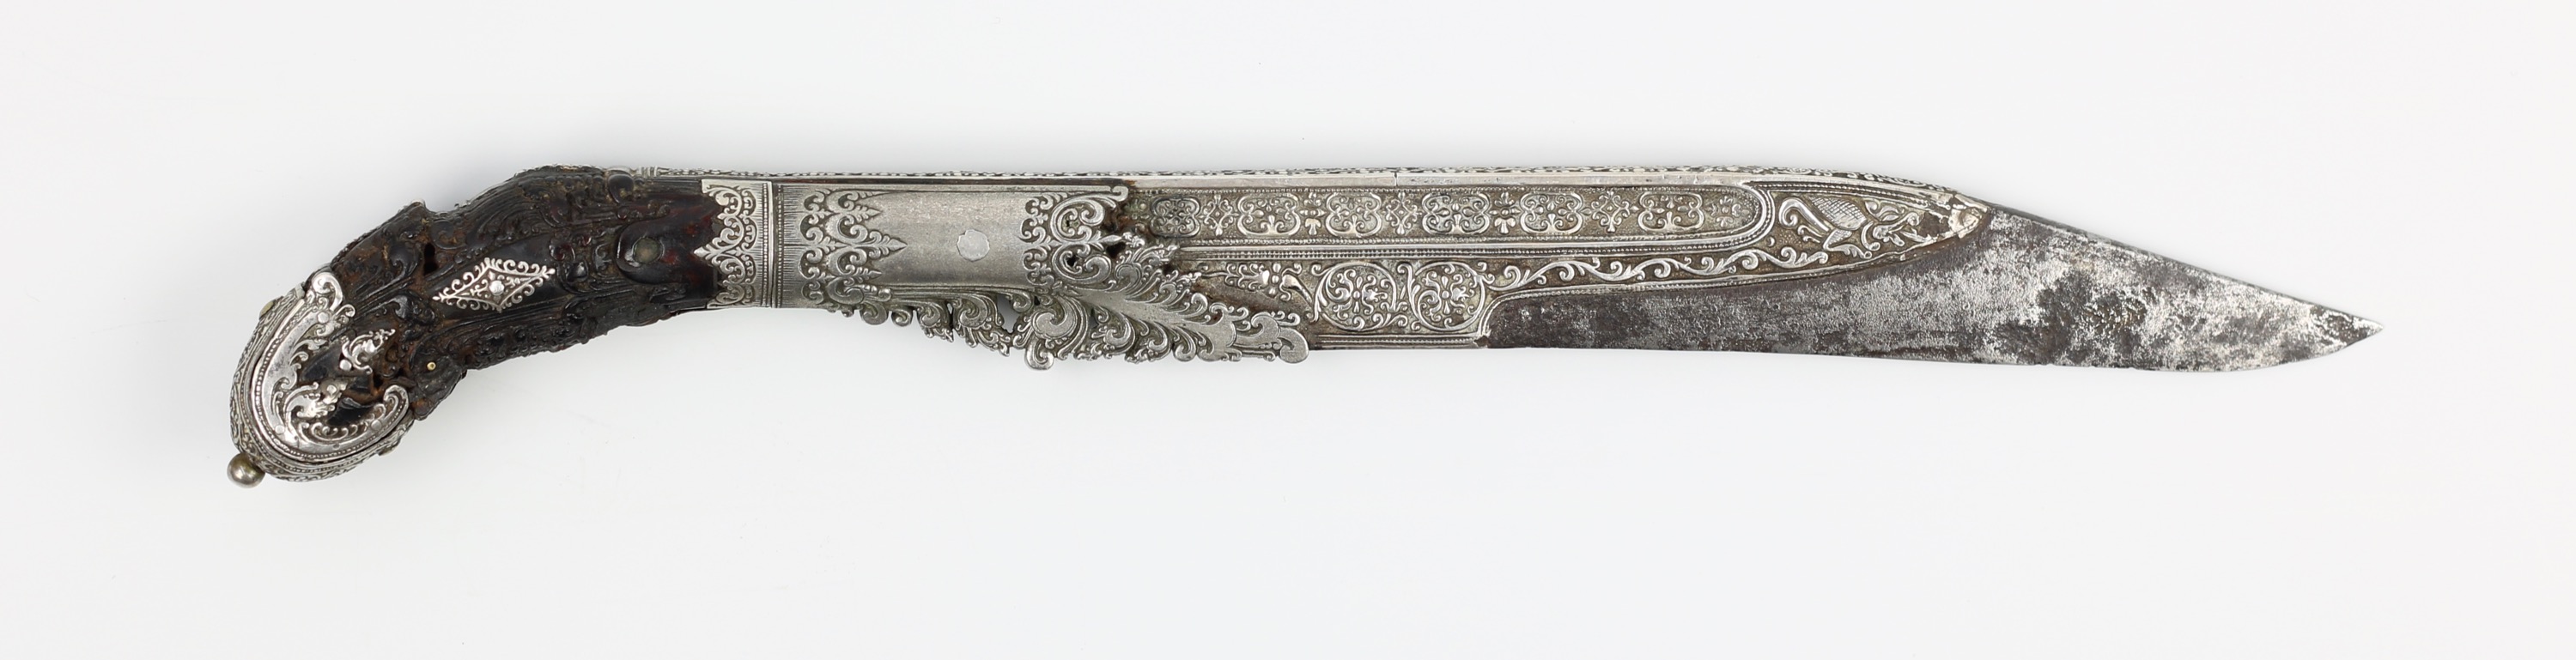 A Sinhalese knife